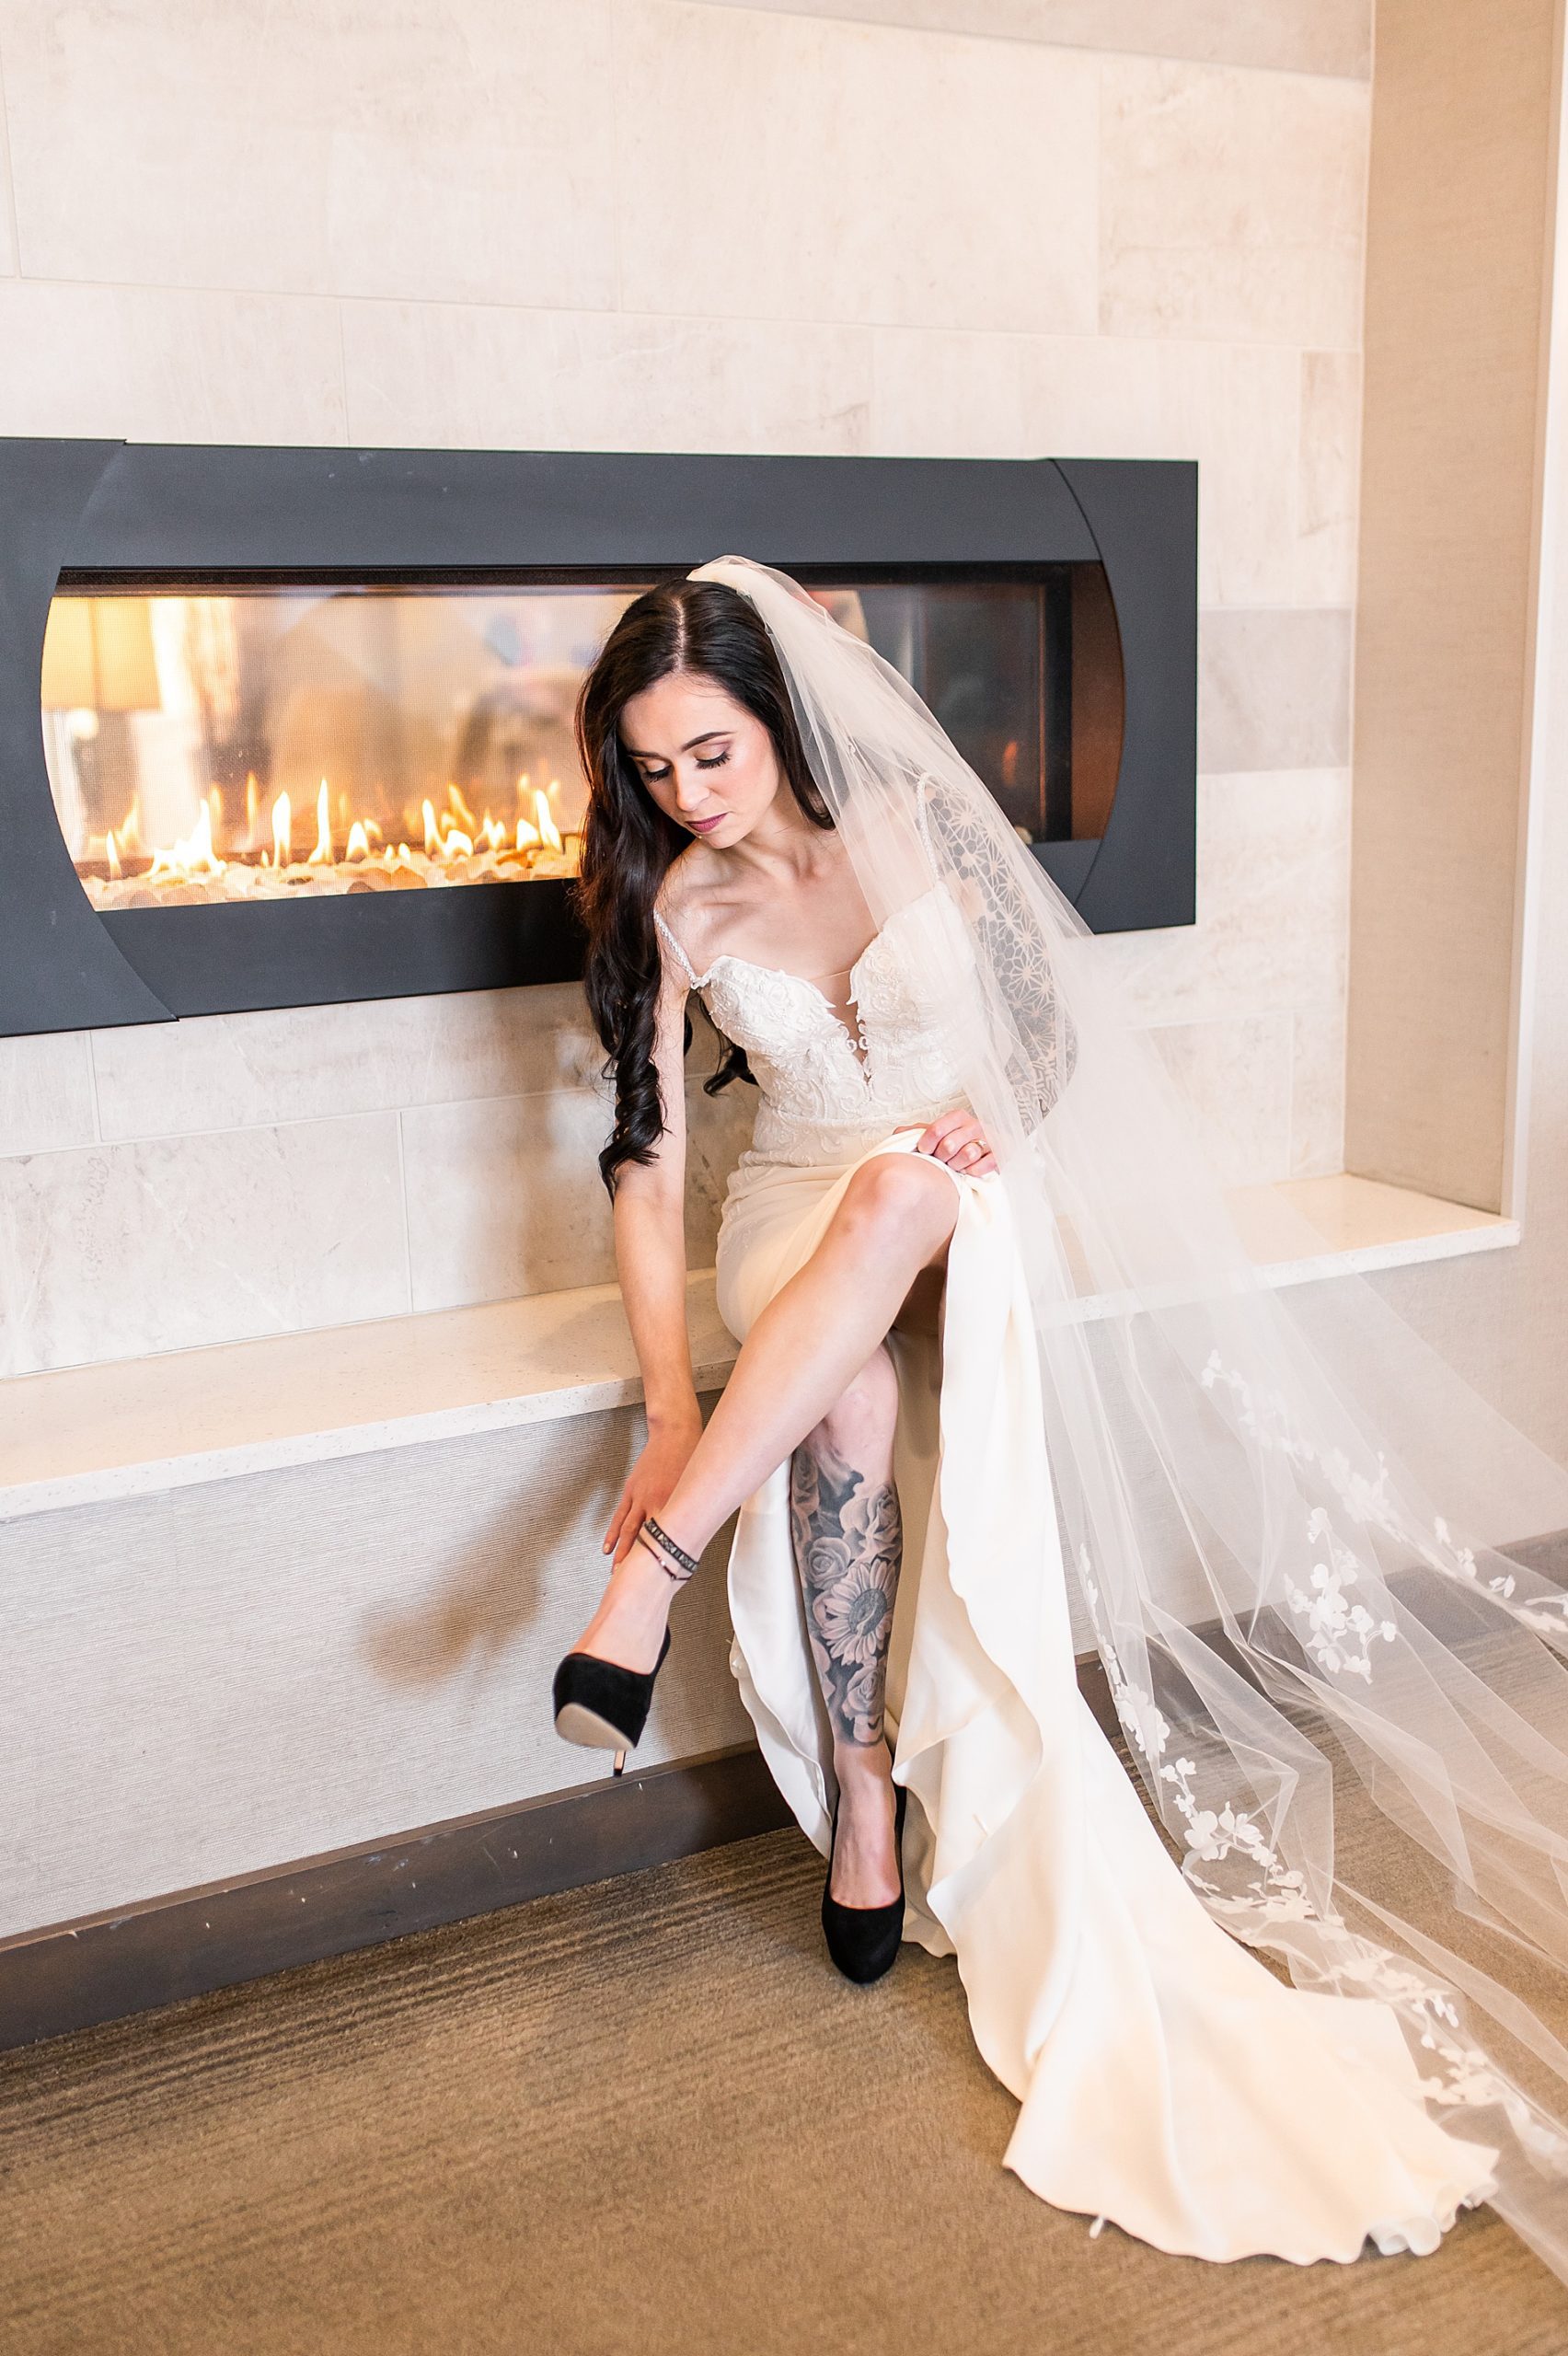 stunning bride puts on black wedding shoes